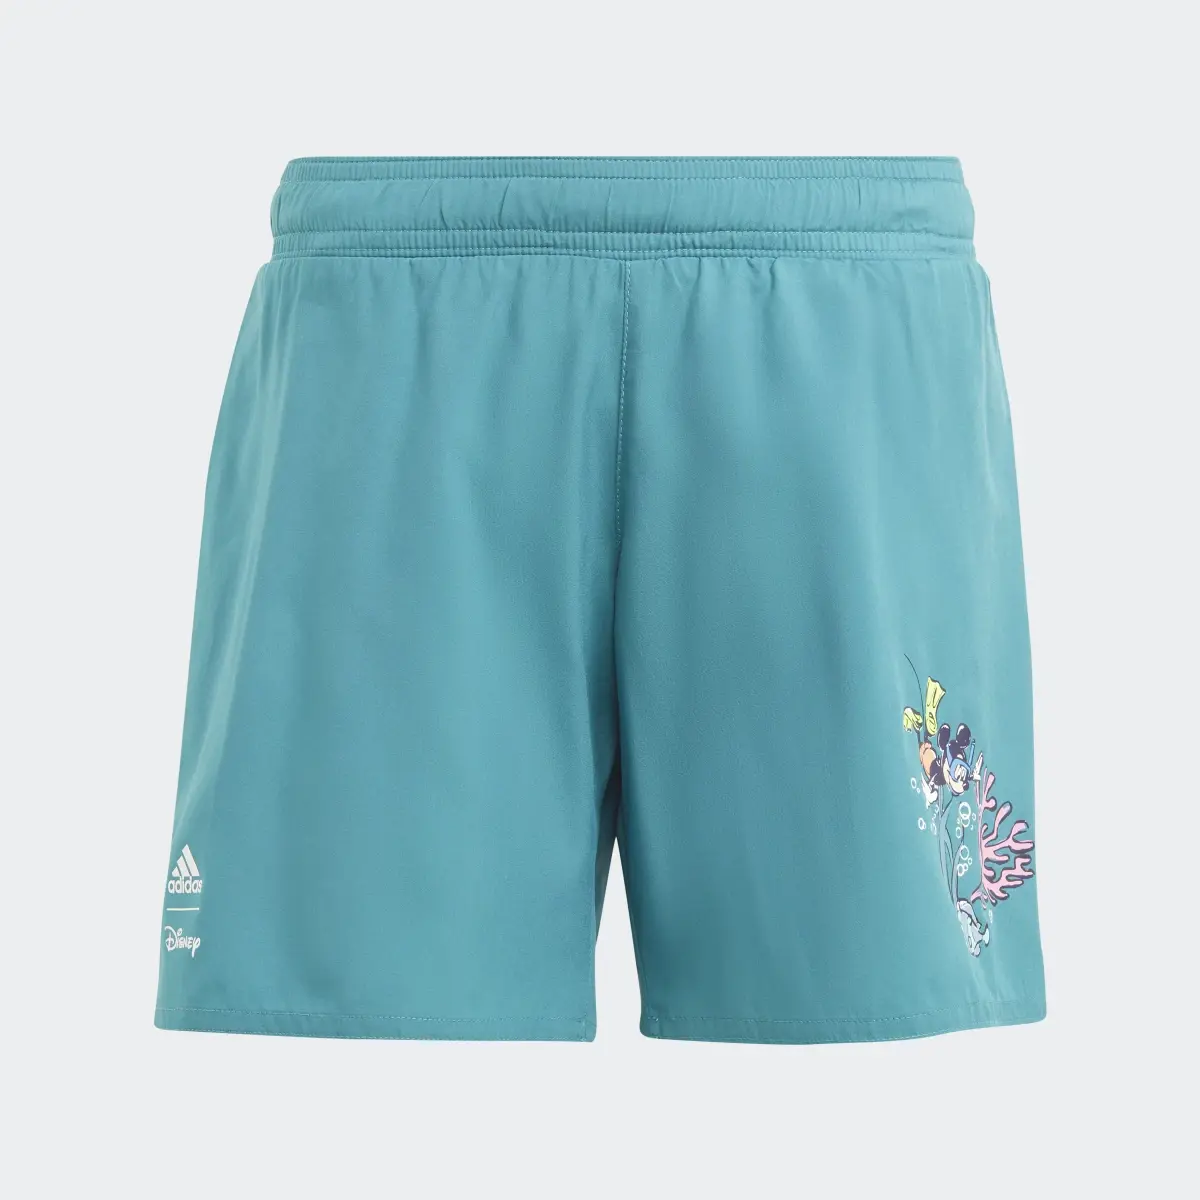 Adidas x Disney Mickey Mouse Swim Shorts. 1